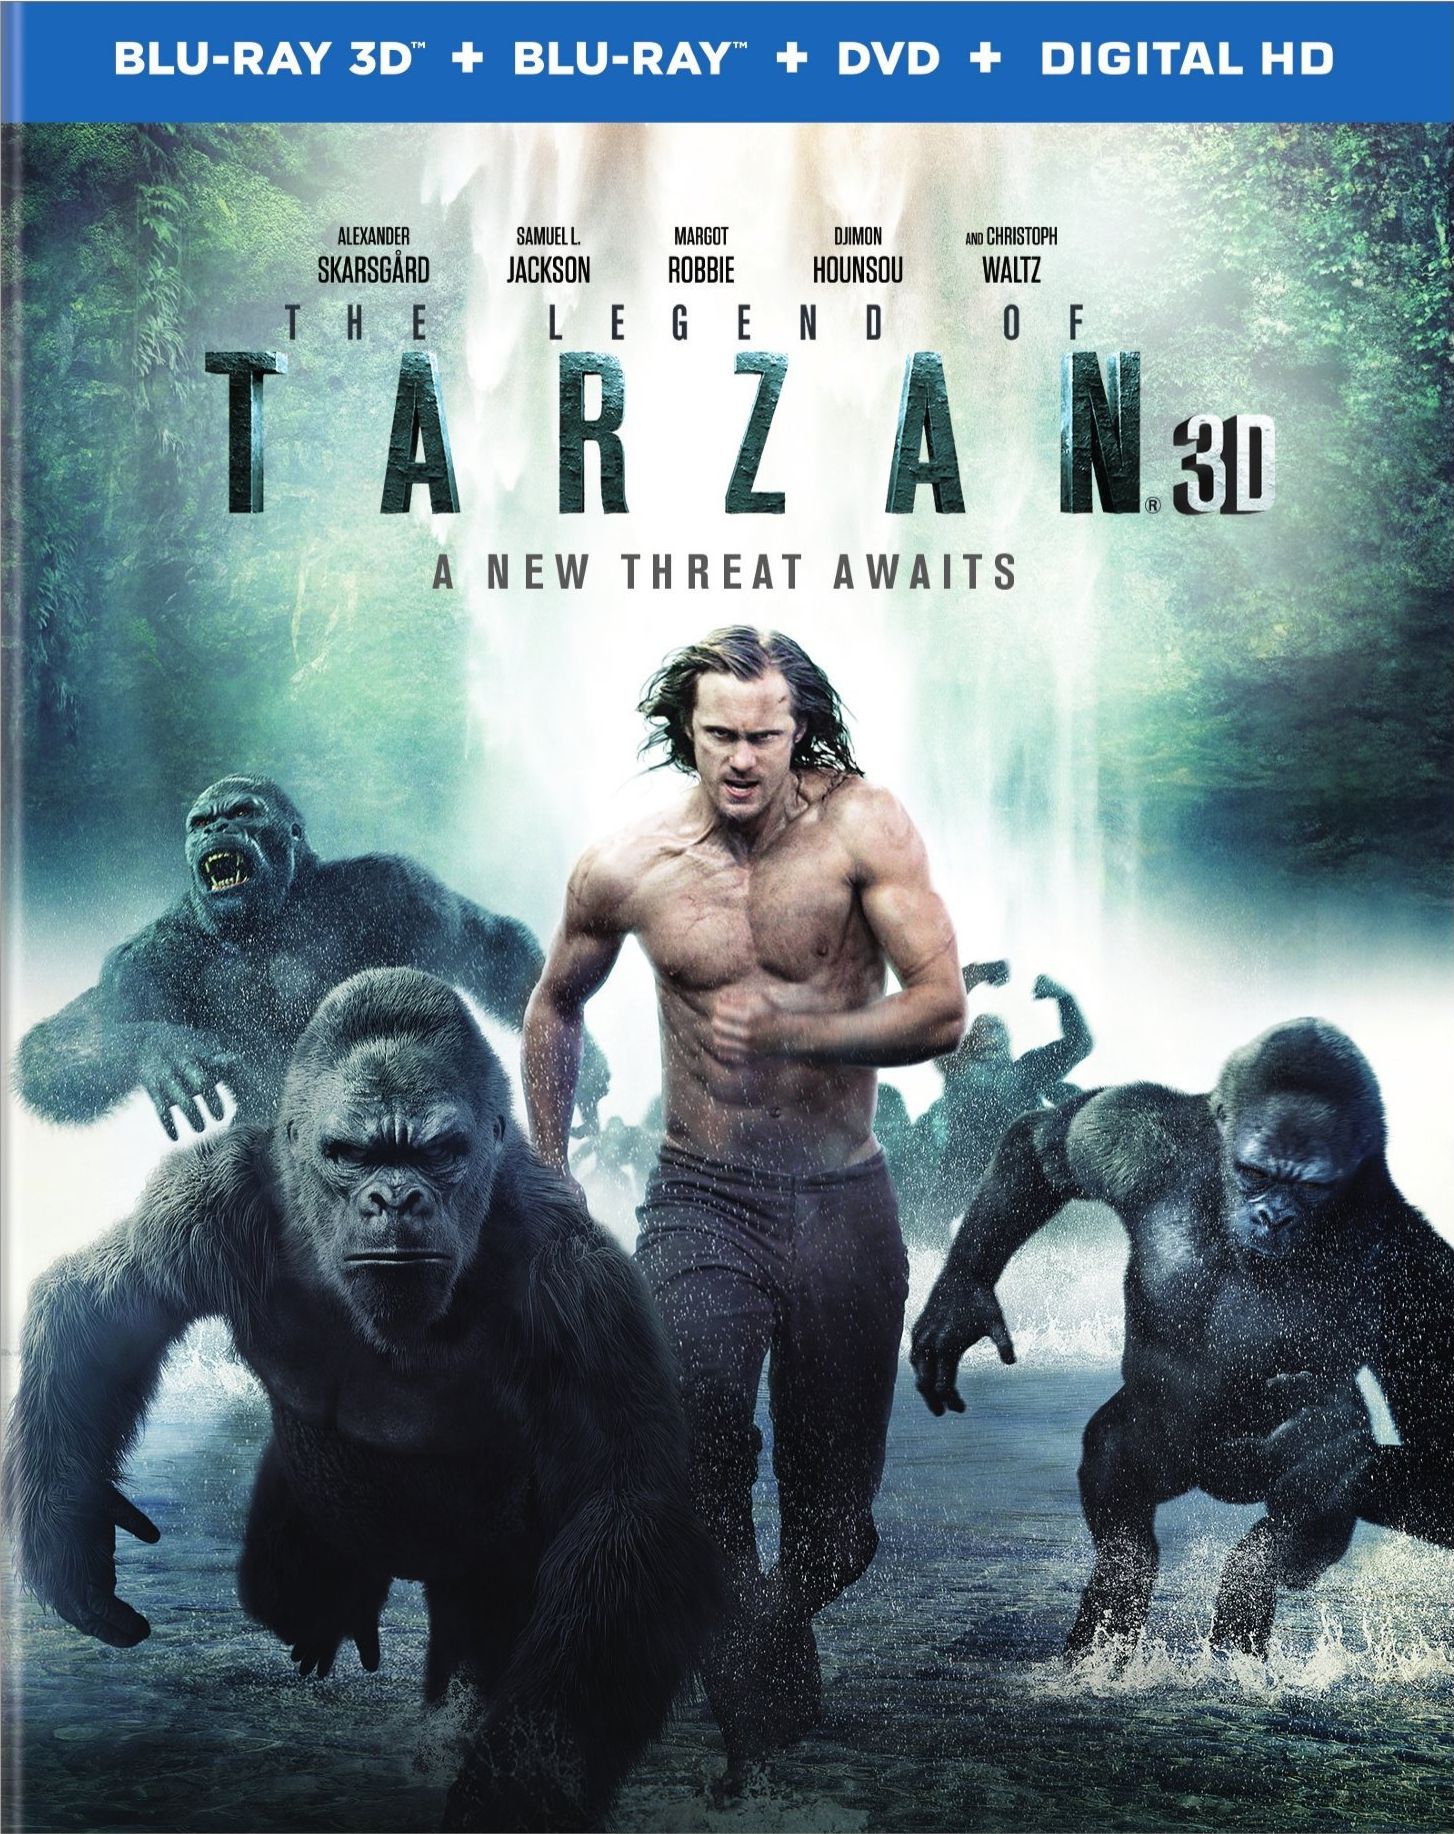 The Legend Of Tarzan Backgrounds, Compatible - PC, Mobile, Gadgets| 1454x1834 px